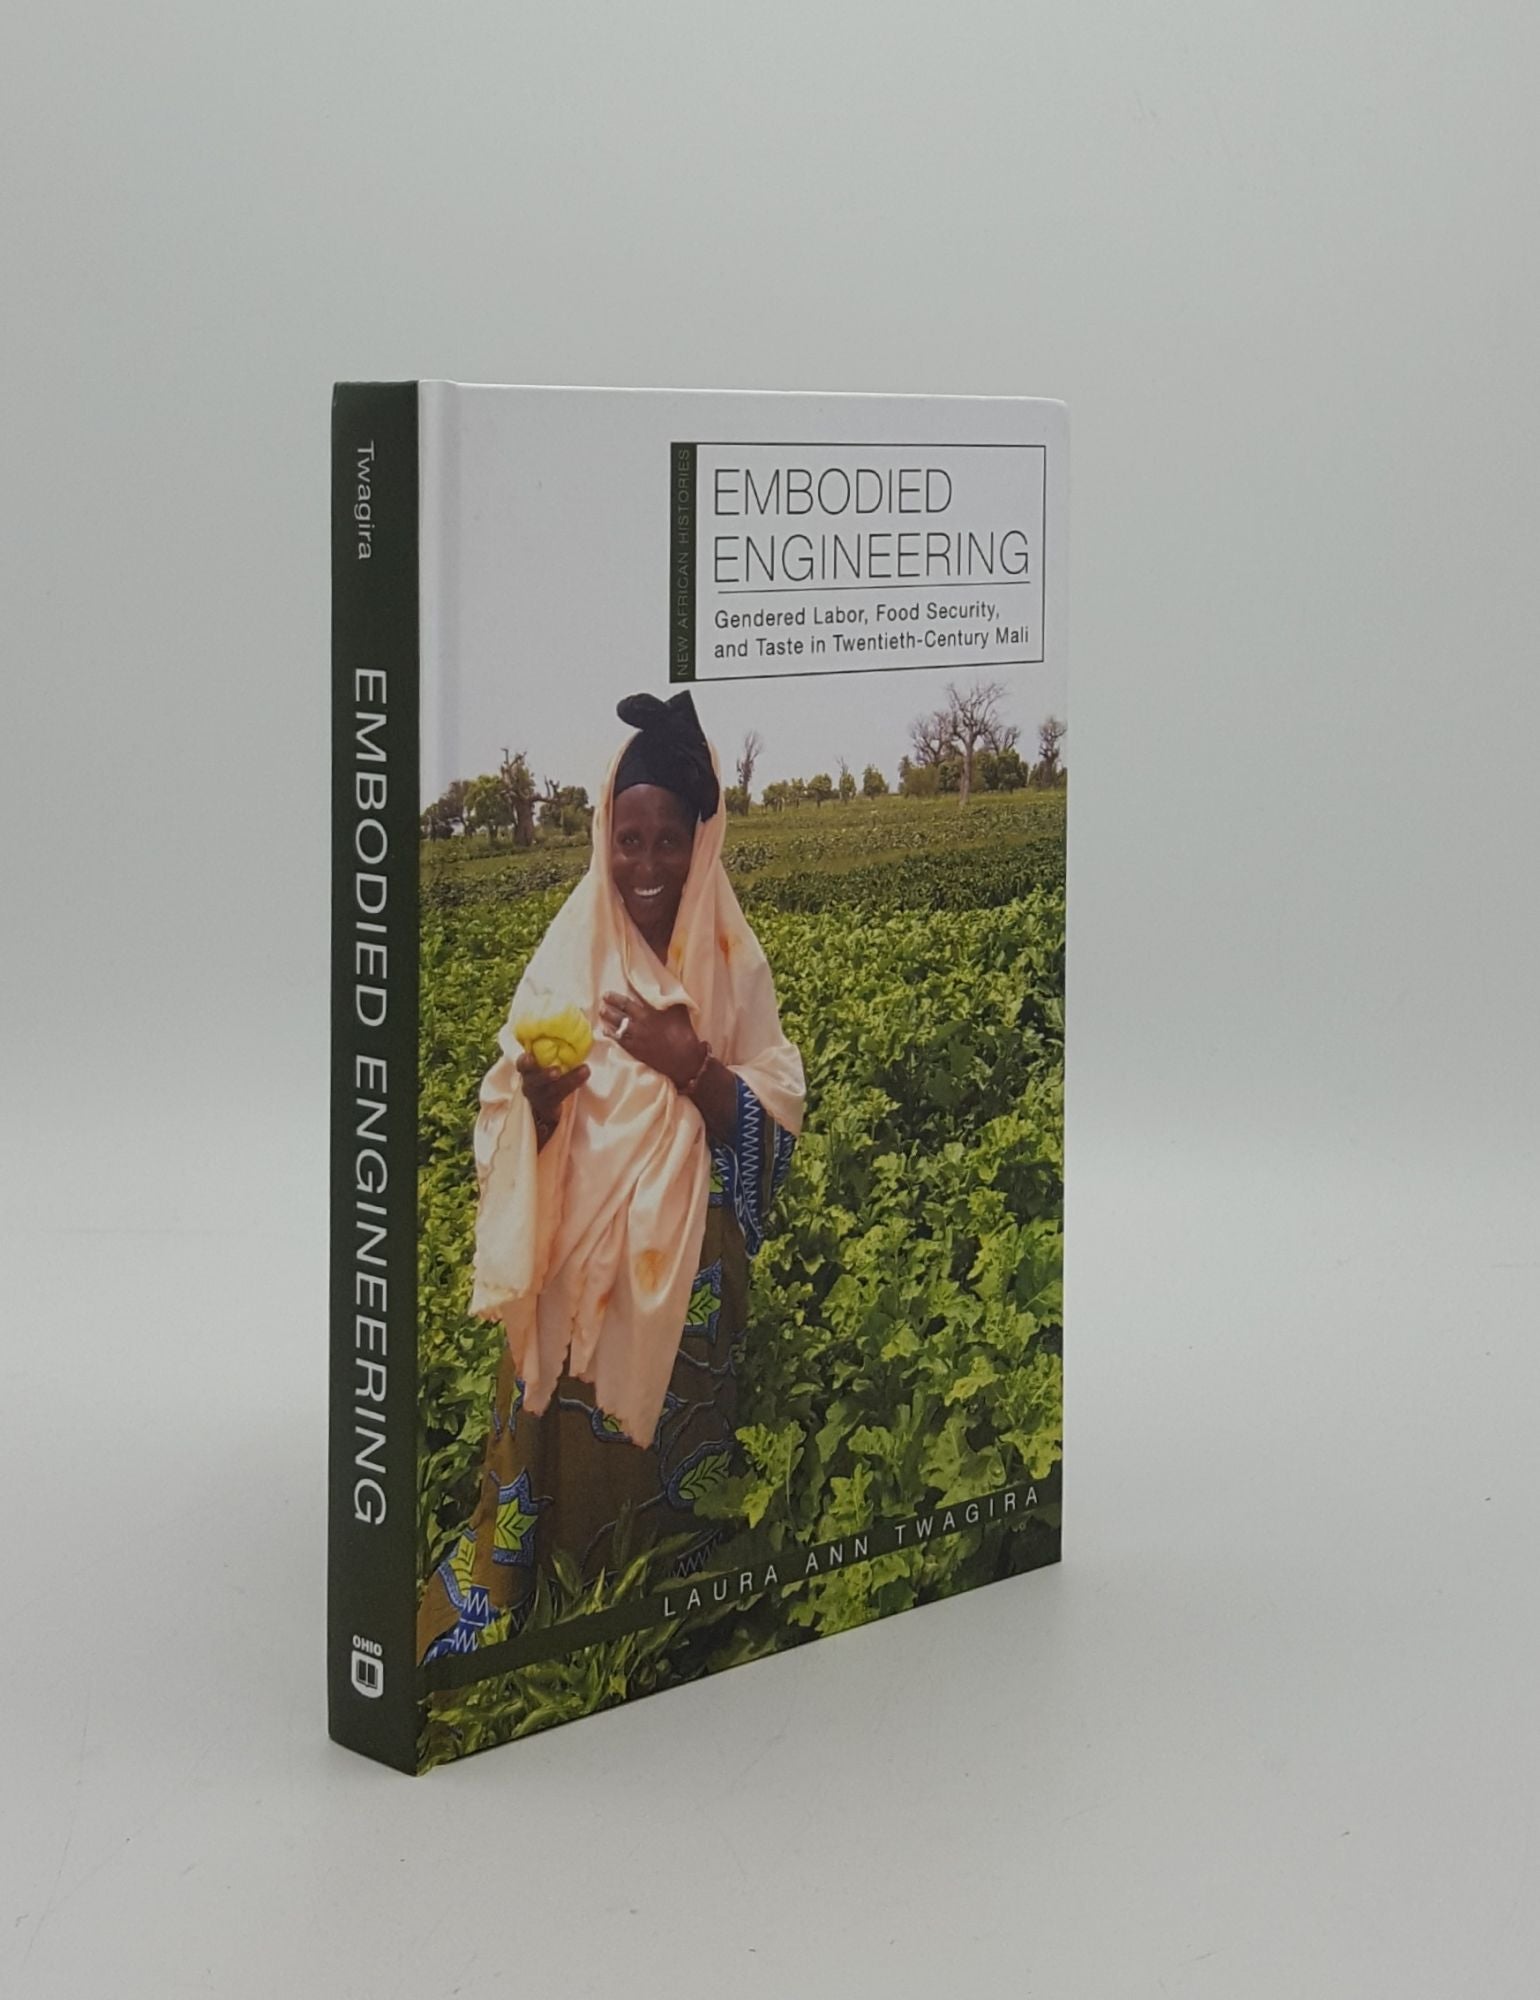 TWAGIRA Laura Ann - Embodied Engineering Gendered Labor Food Security and Taste in Twentieth-Century Mali